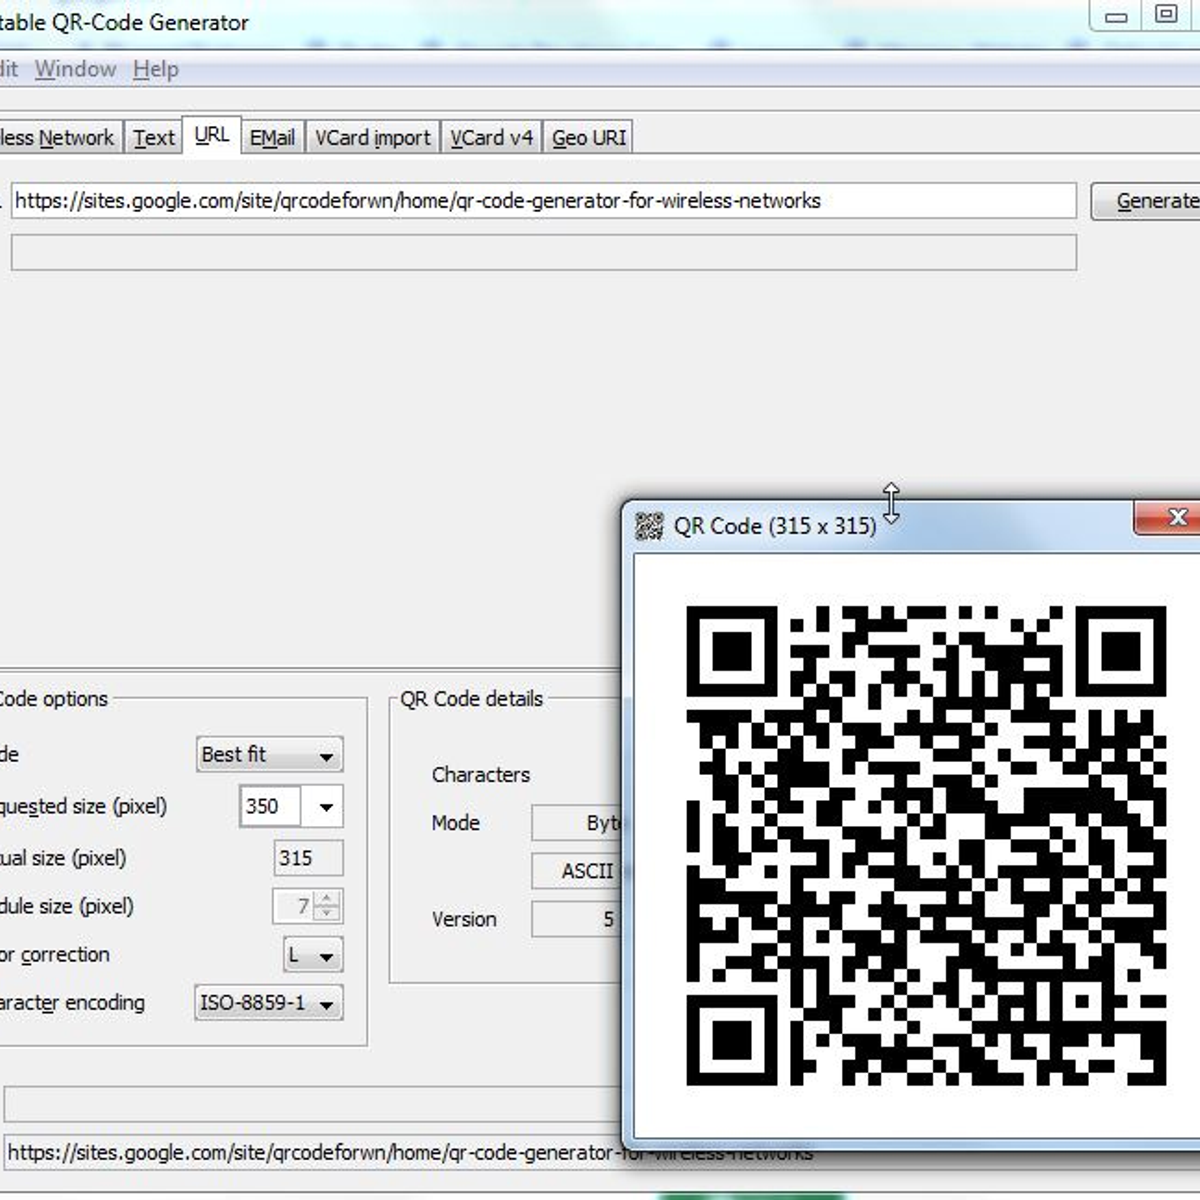 Roblosecurity Code Generator - roblox customize your avatar get robux eu5 net code